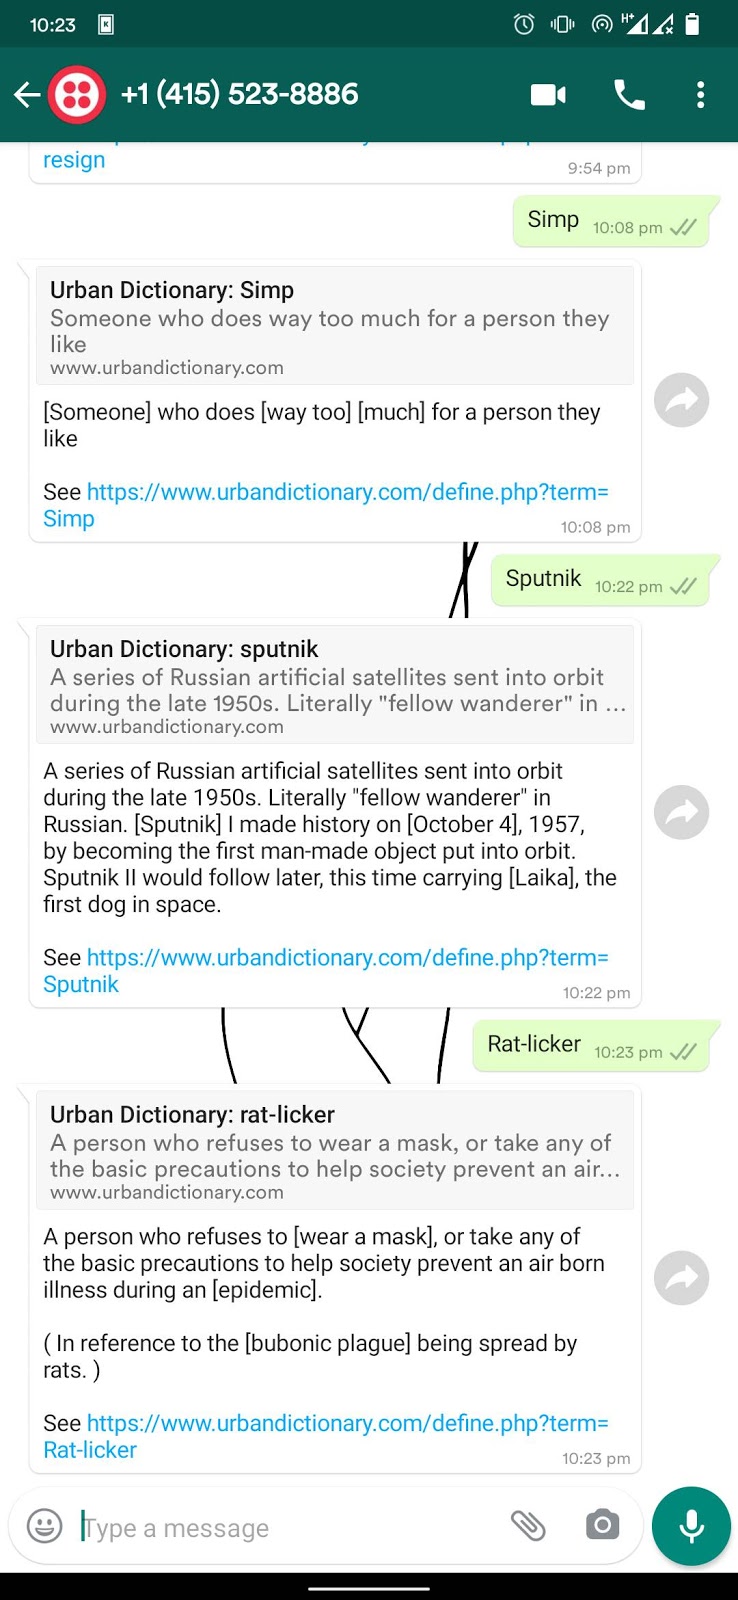 Screenshot of Urban Dictionary definitions